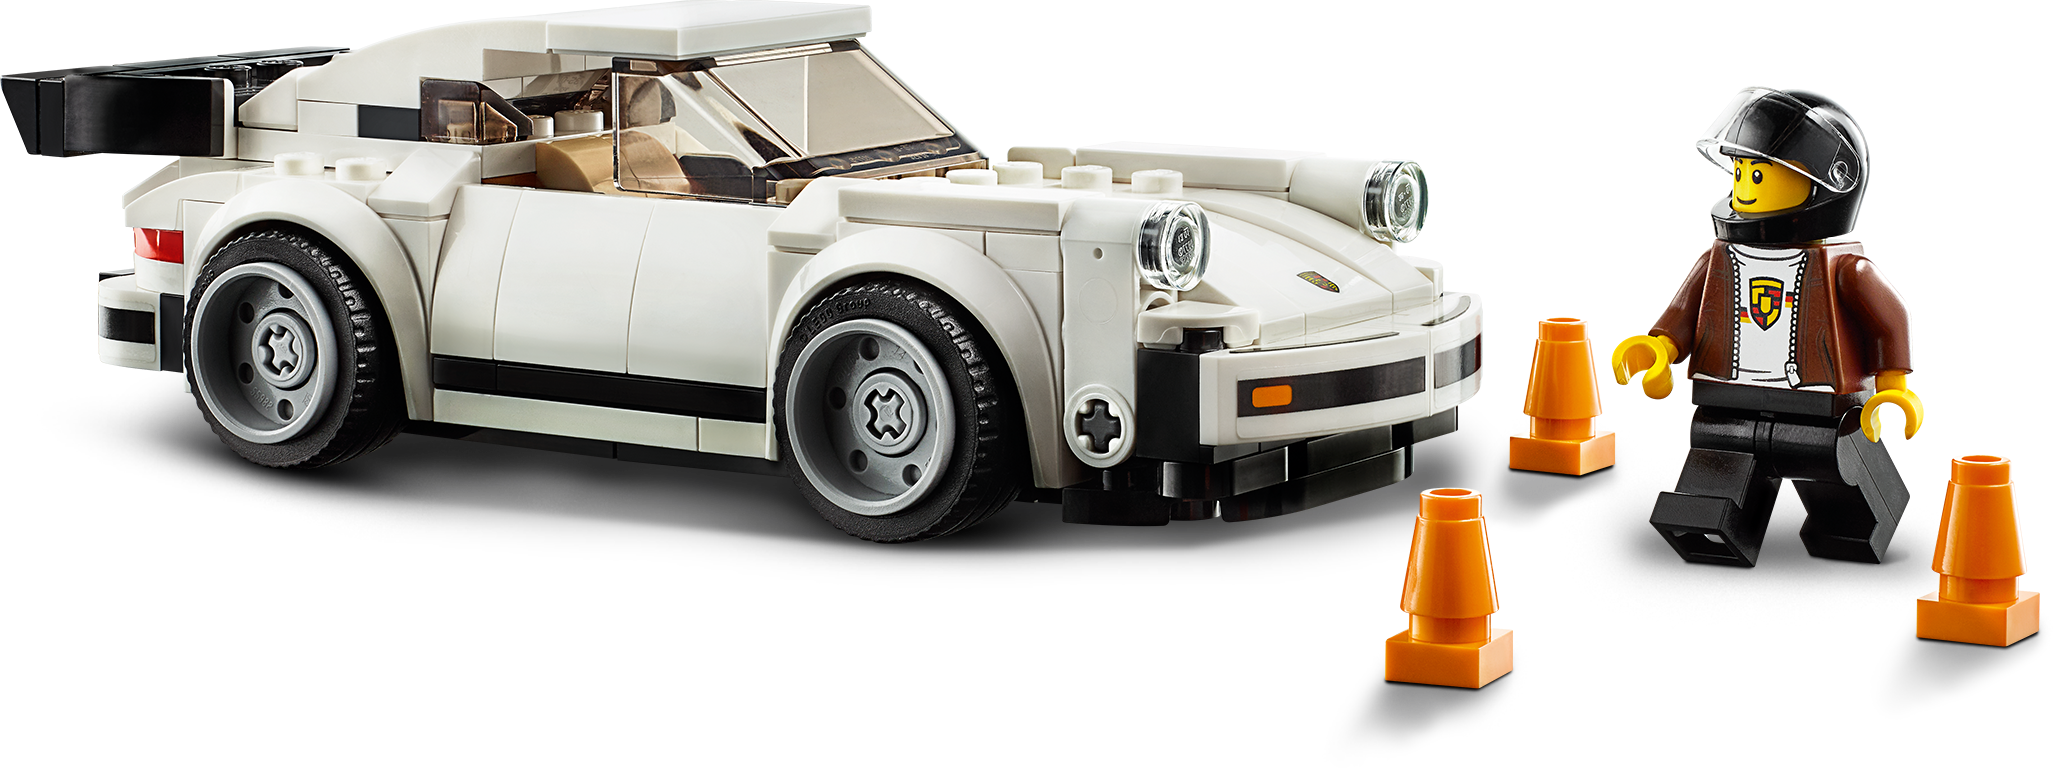 LEGO Speed Champions 75895 pas cher, 1974 Porsche 911 Turbo 3.0